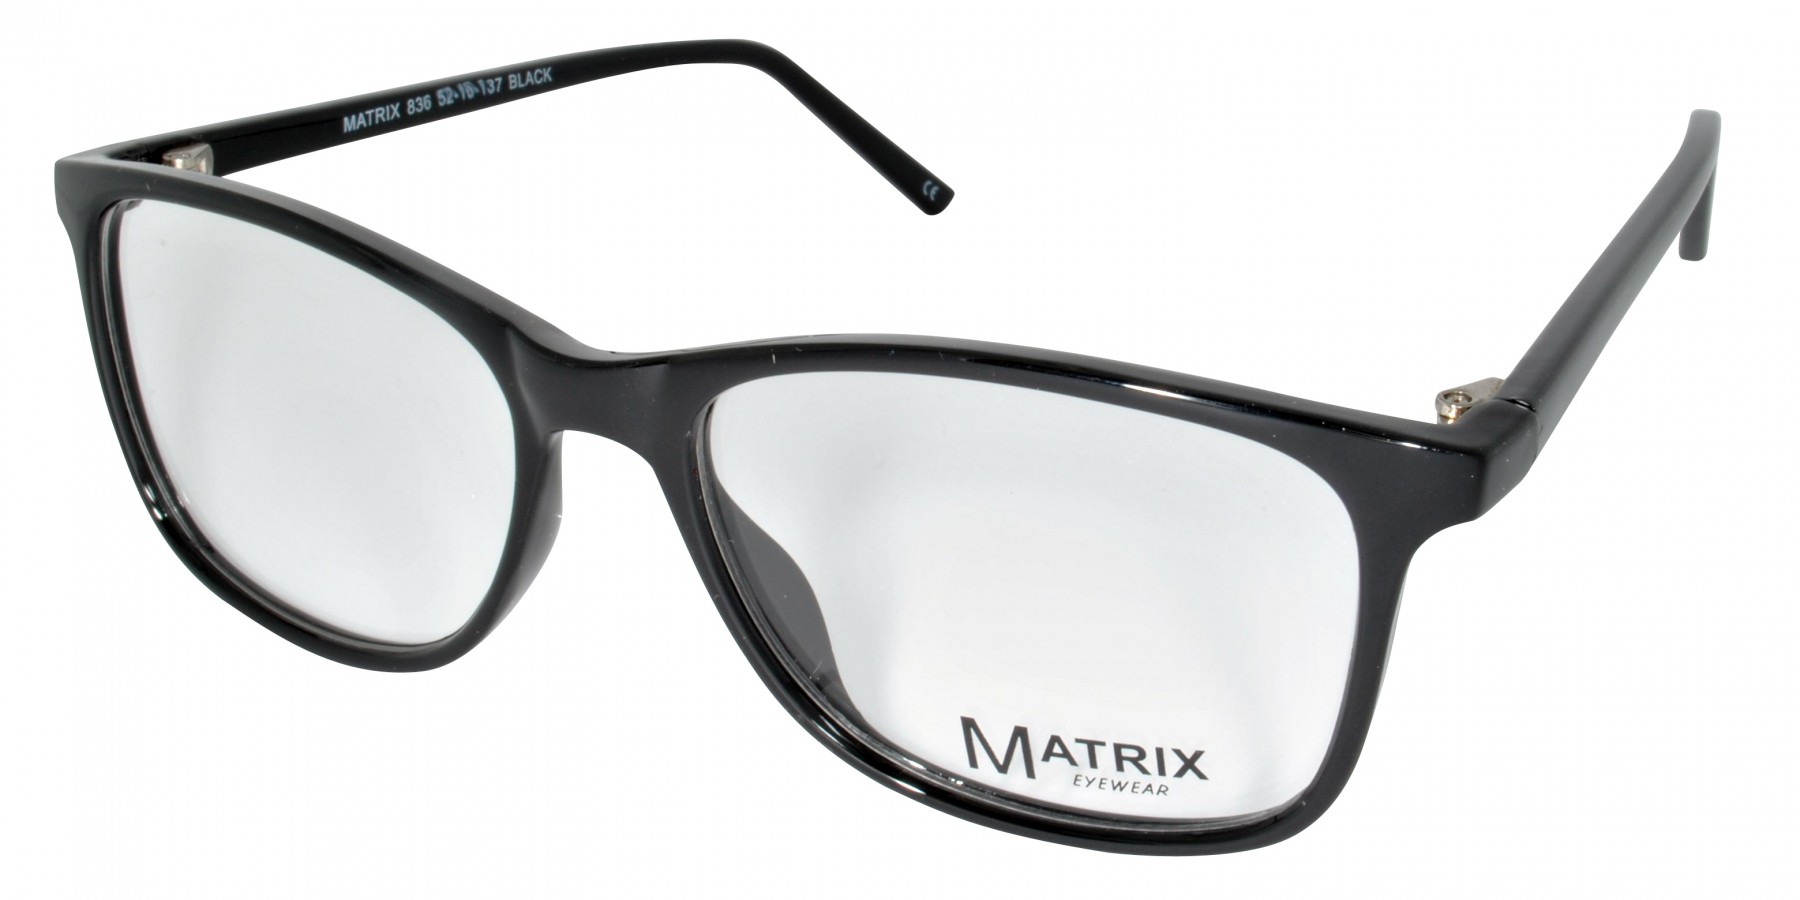 Matrix 836 Prescription Glasses